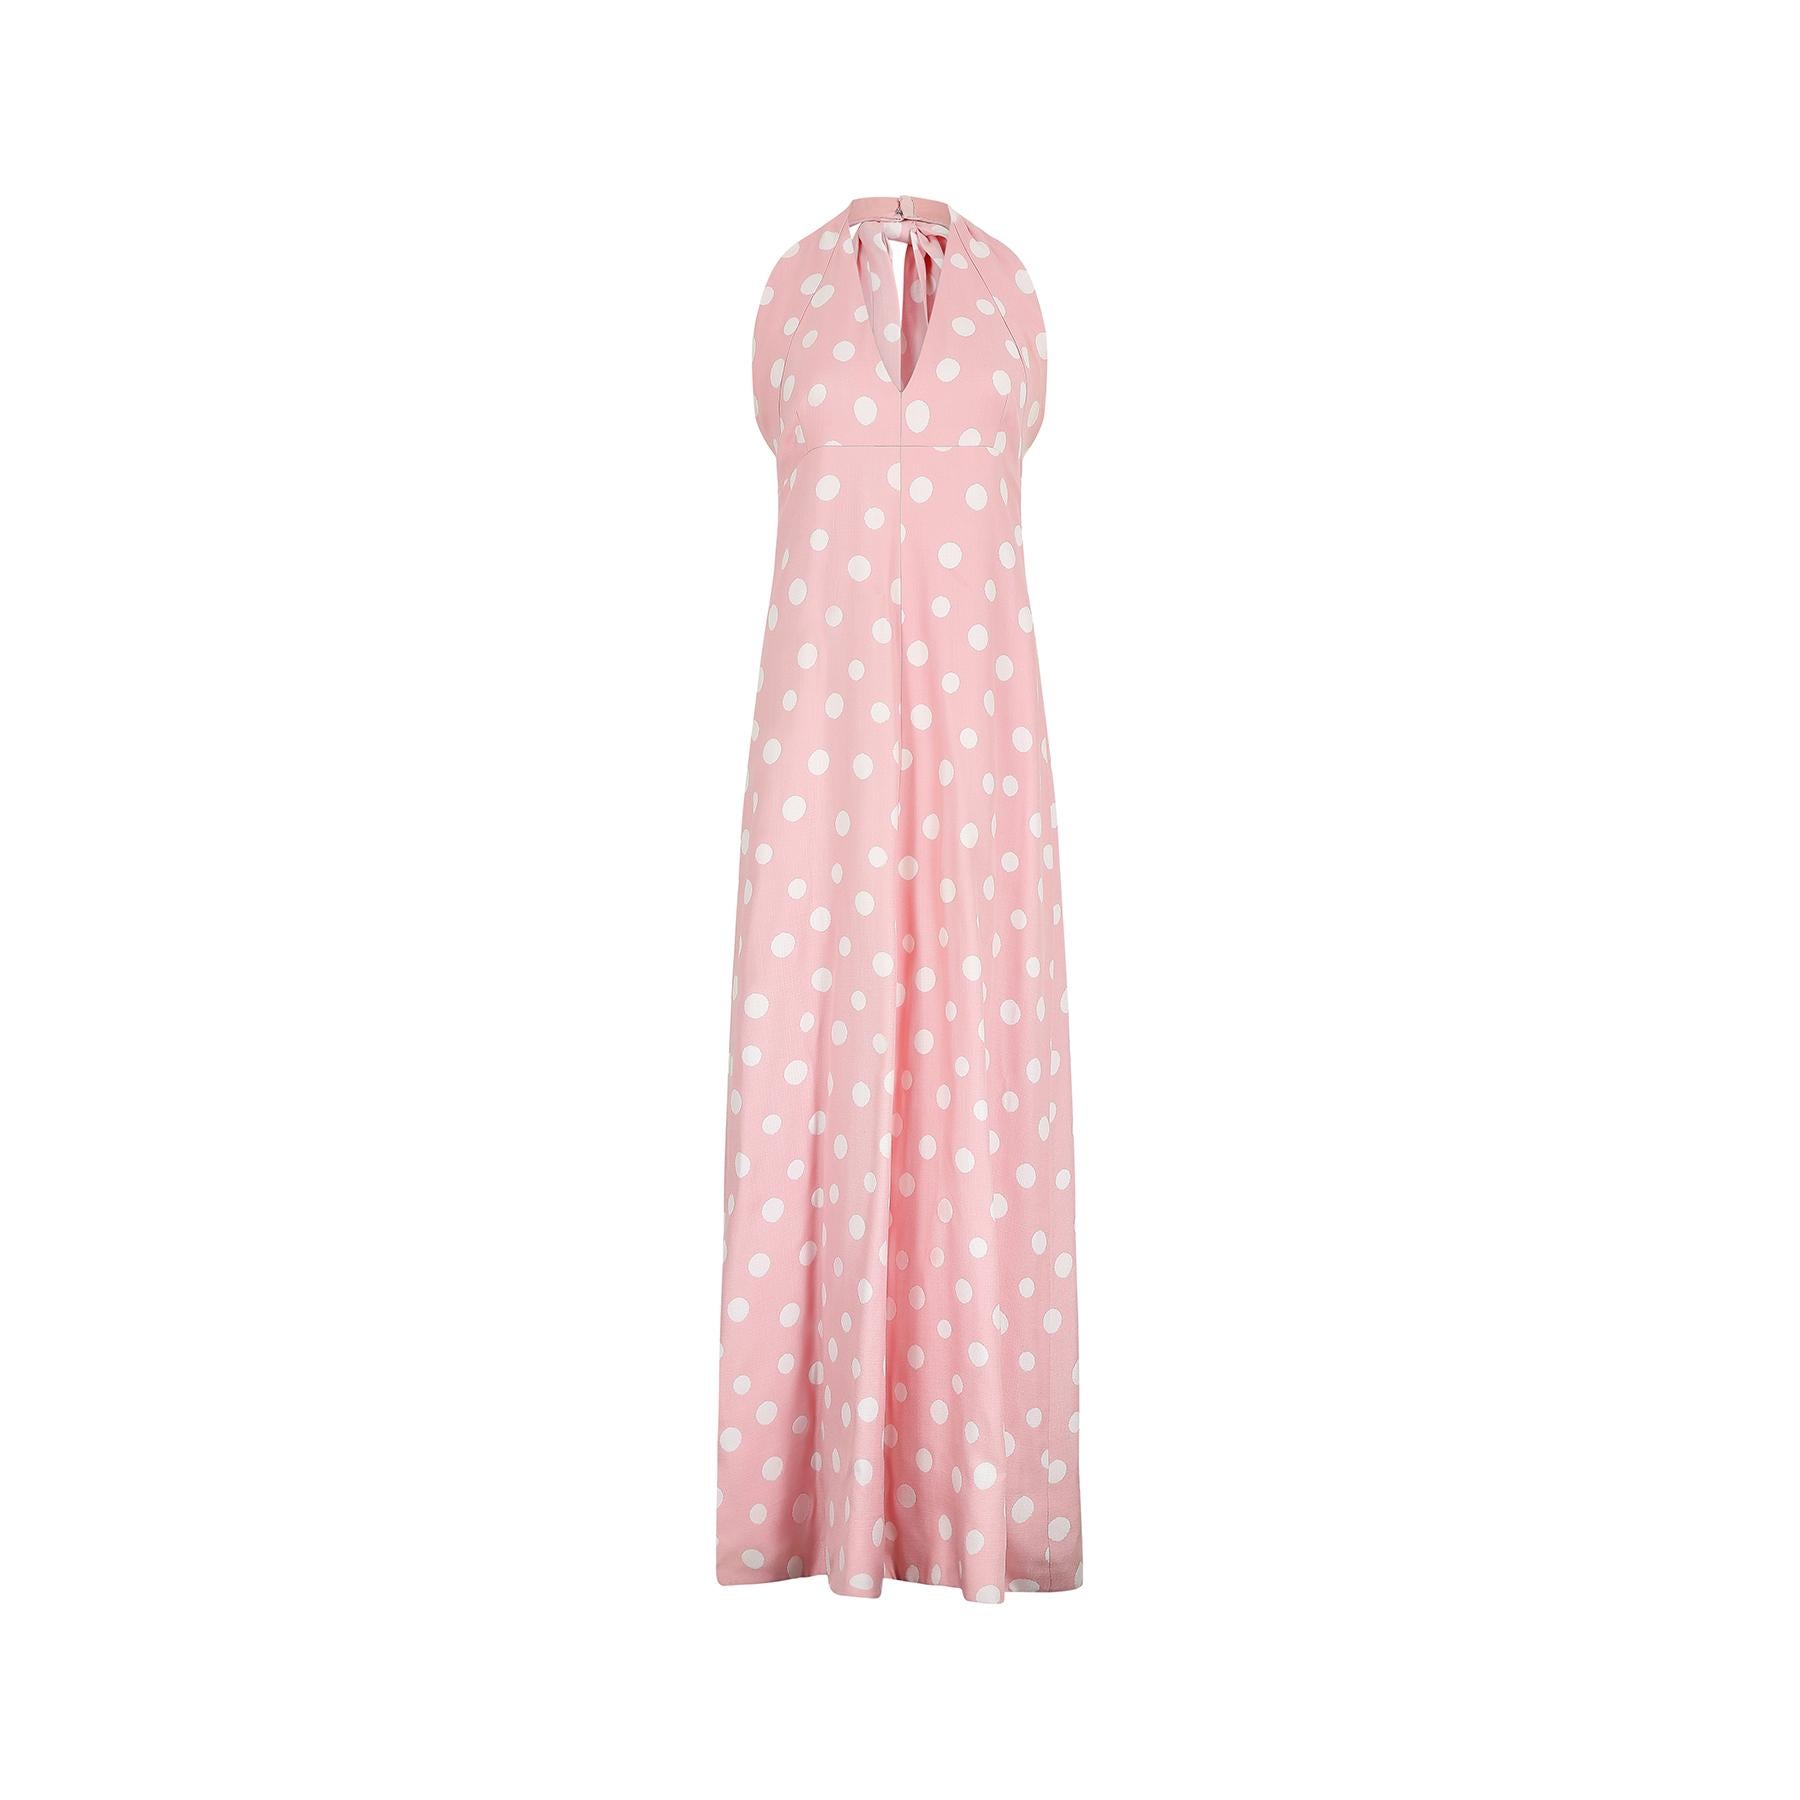 1970s Christian Dior Couture Pink Polka Dot Halter Neck Dress 1